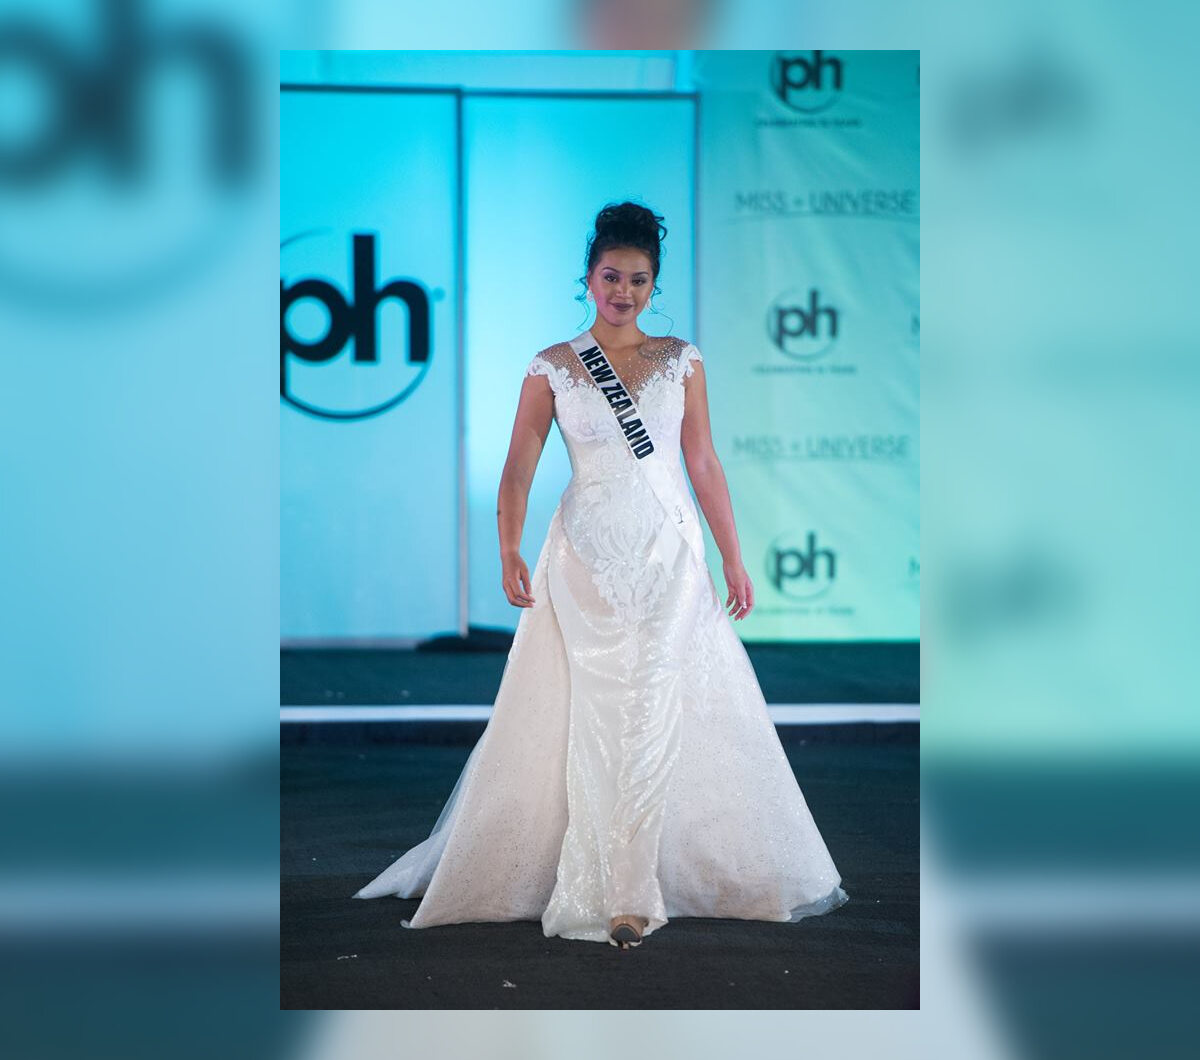 Harlem-Cruz Atarangi Ihaia, Miss Nowej Zelandii 